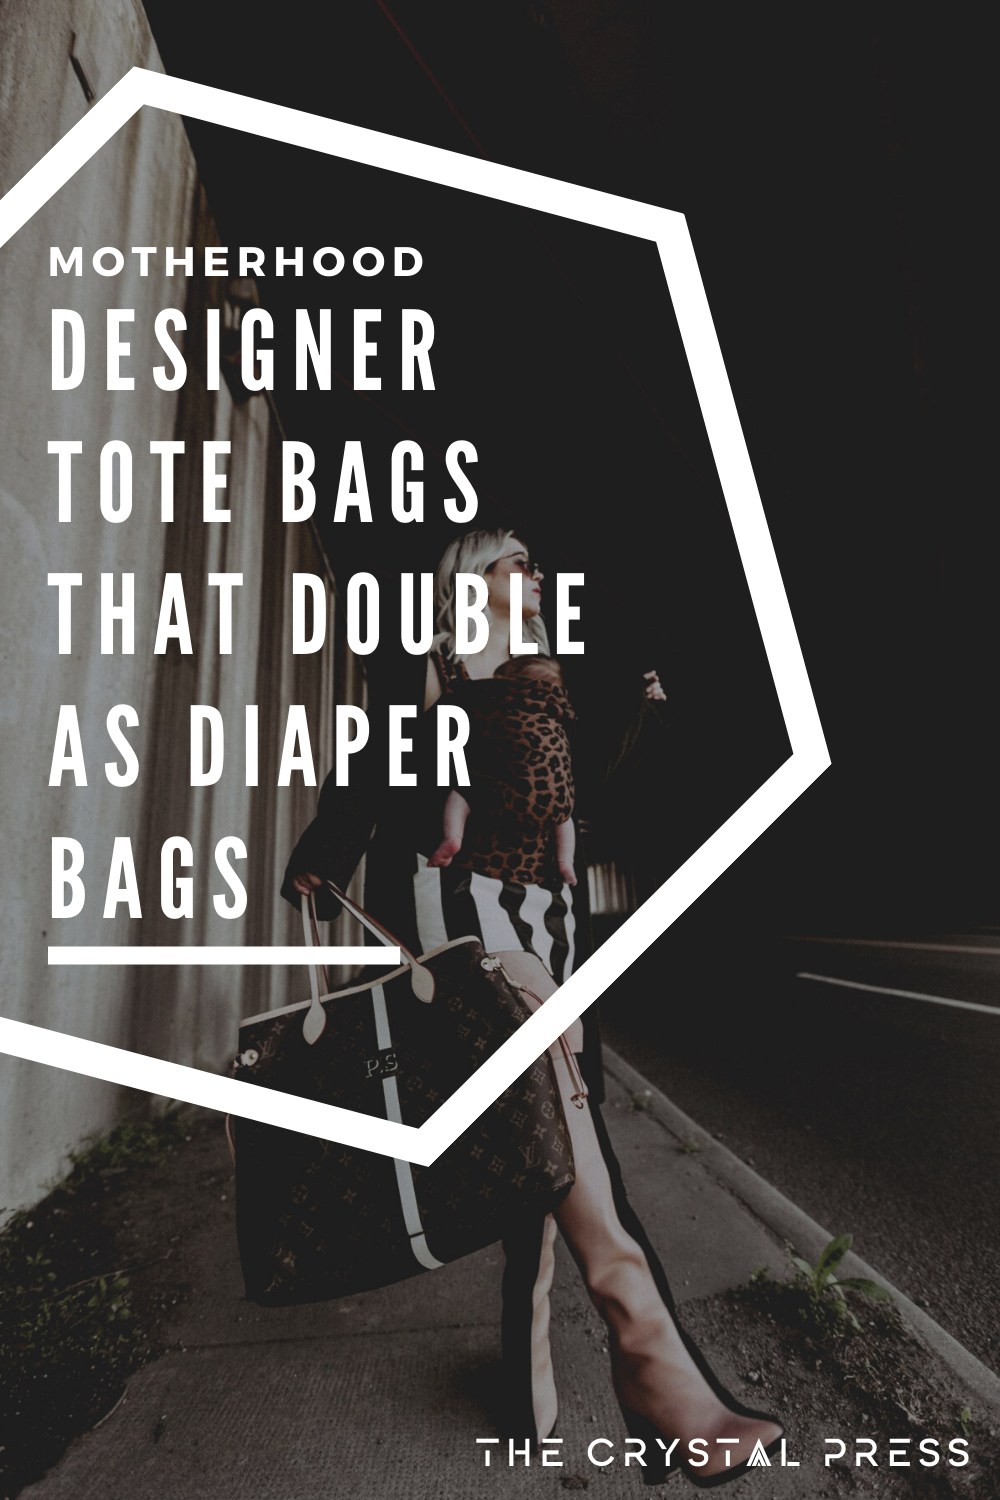 Top 3 Designer Bags That Double as a Diaper Bag